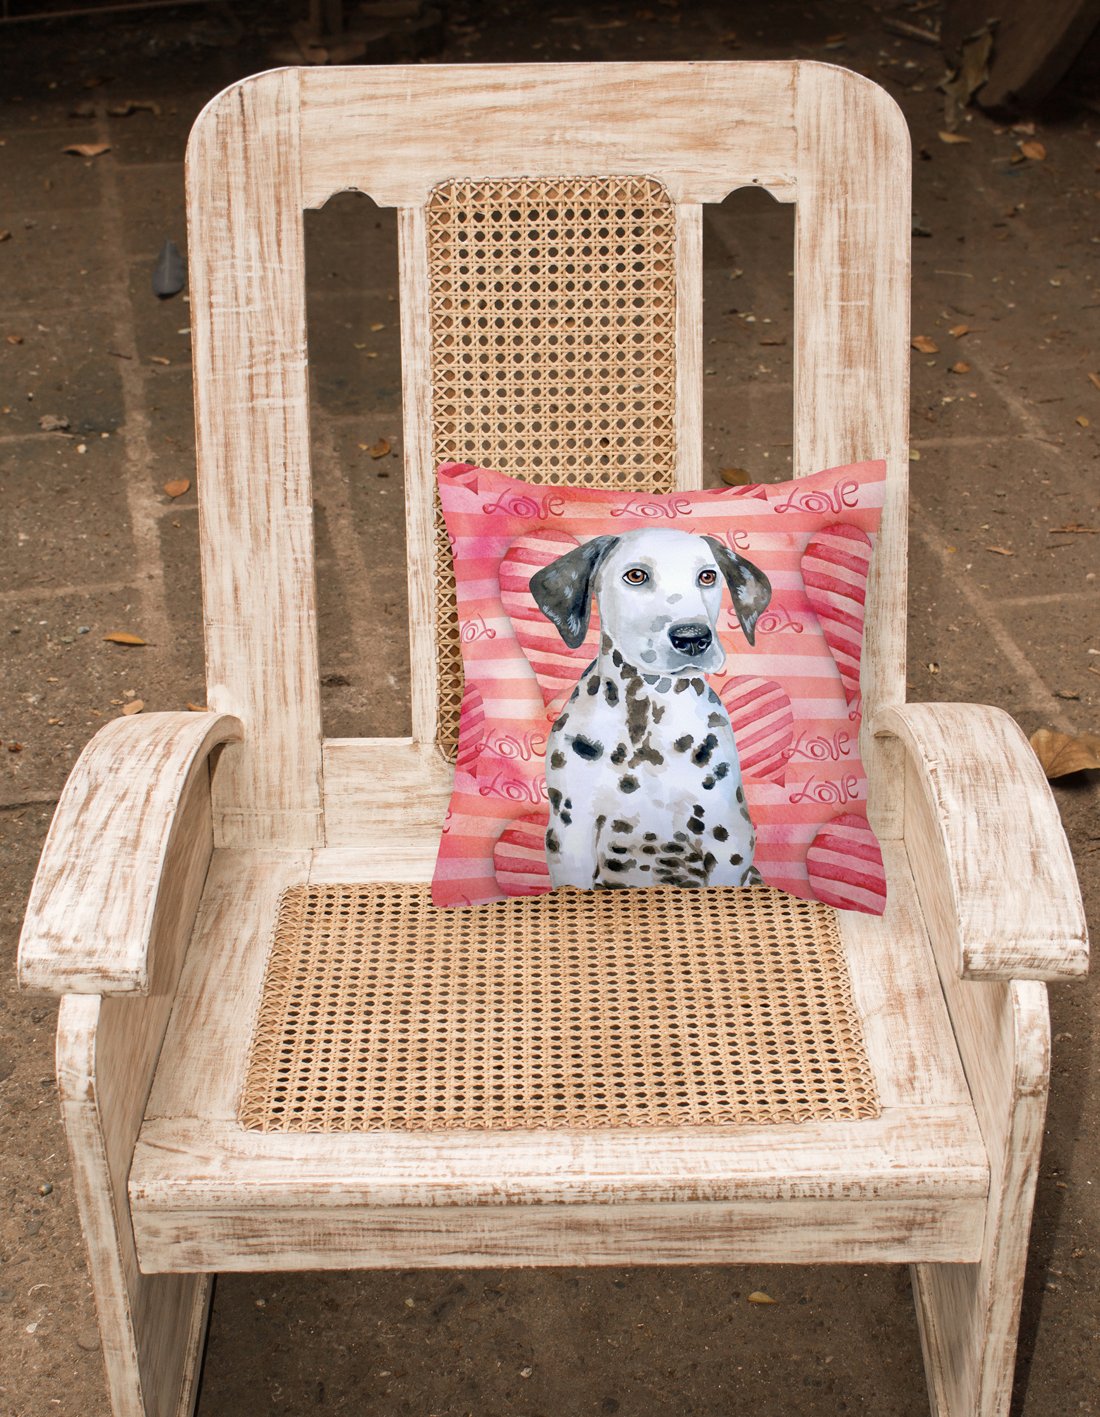 Dalmatian Puppy Love Fabric Decorative Pillow BB9795PW1818 by Caroline's Treasures